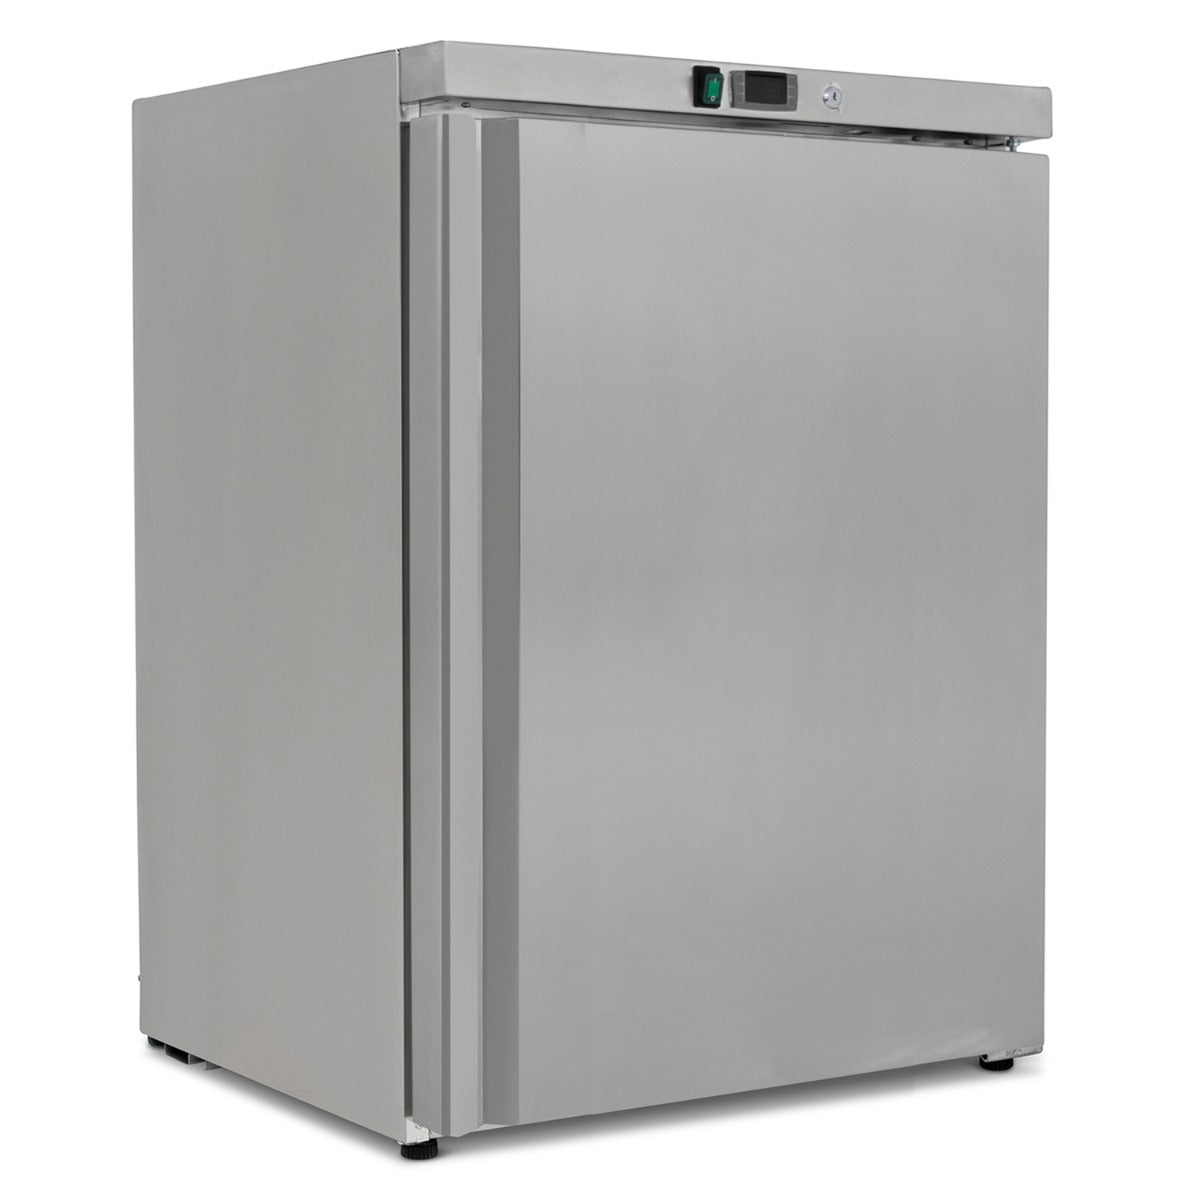 Koldbox 200L Stainless Steel Under Counter Freezer